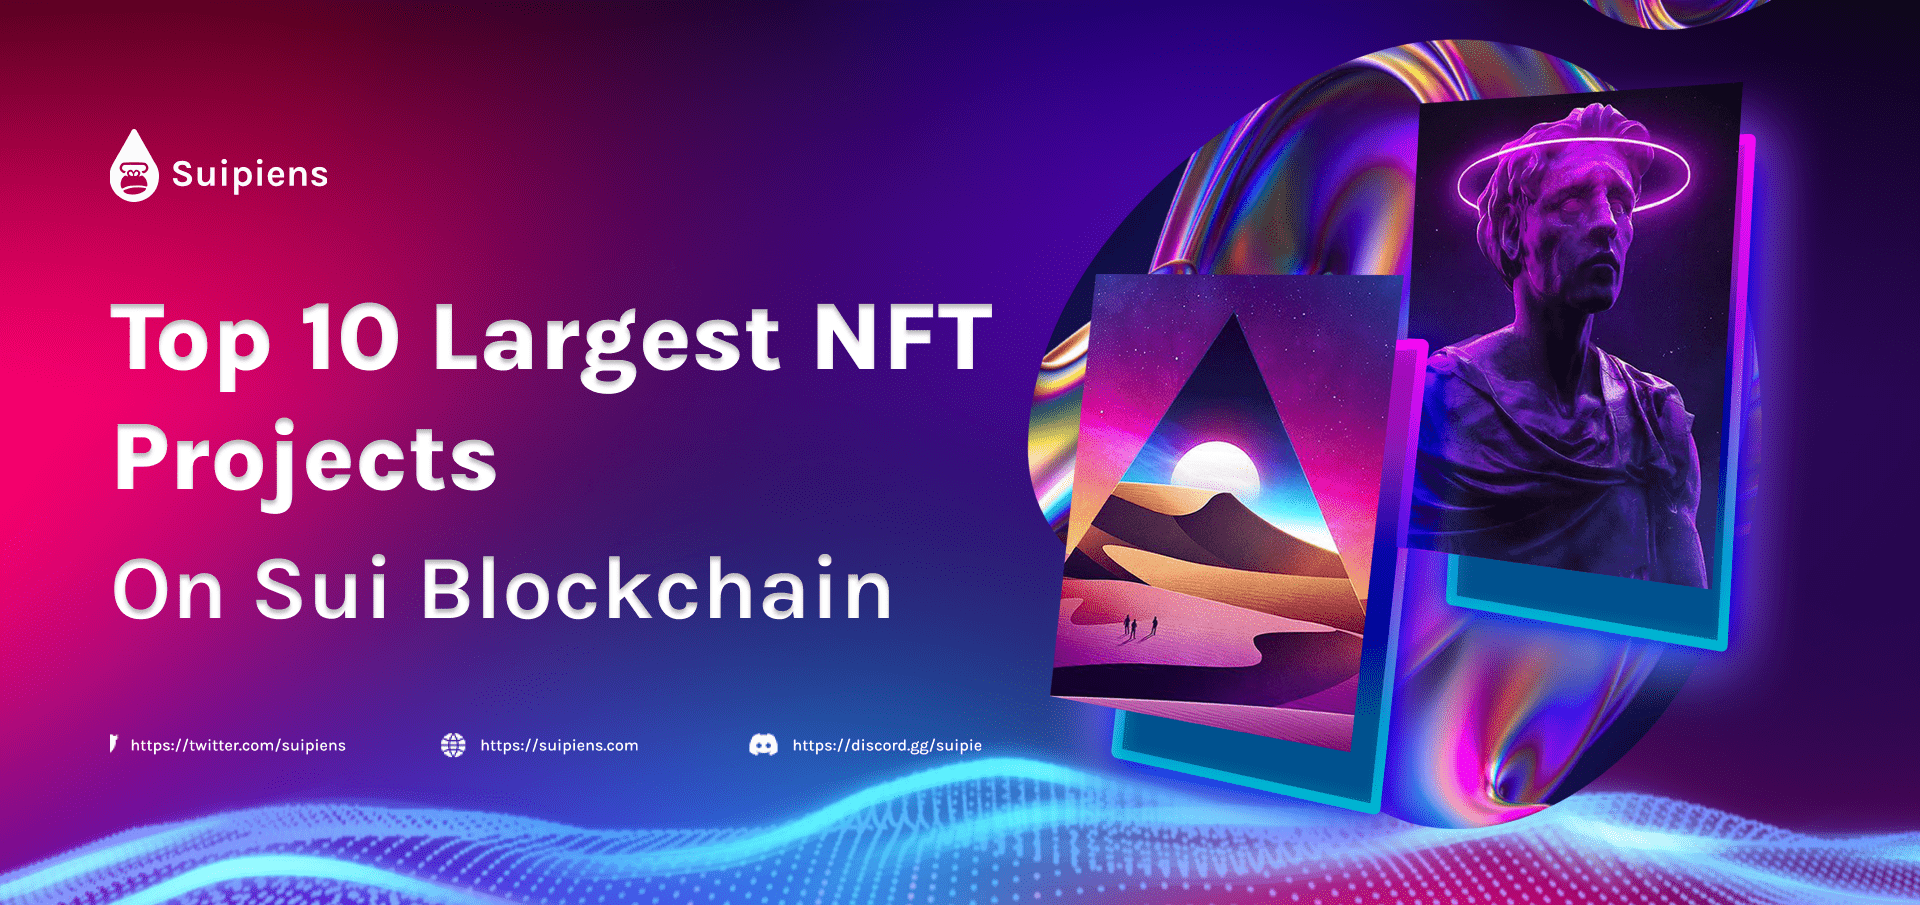 Top 10 Largest NFT Projects On Sui Blockchain (Latest Version)